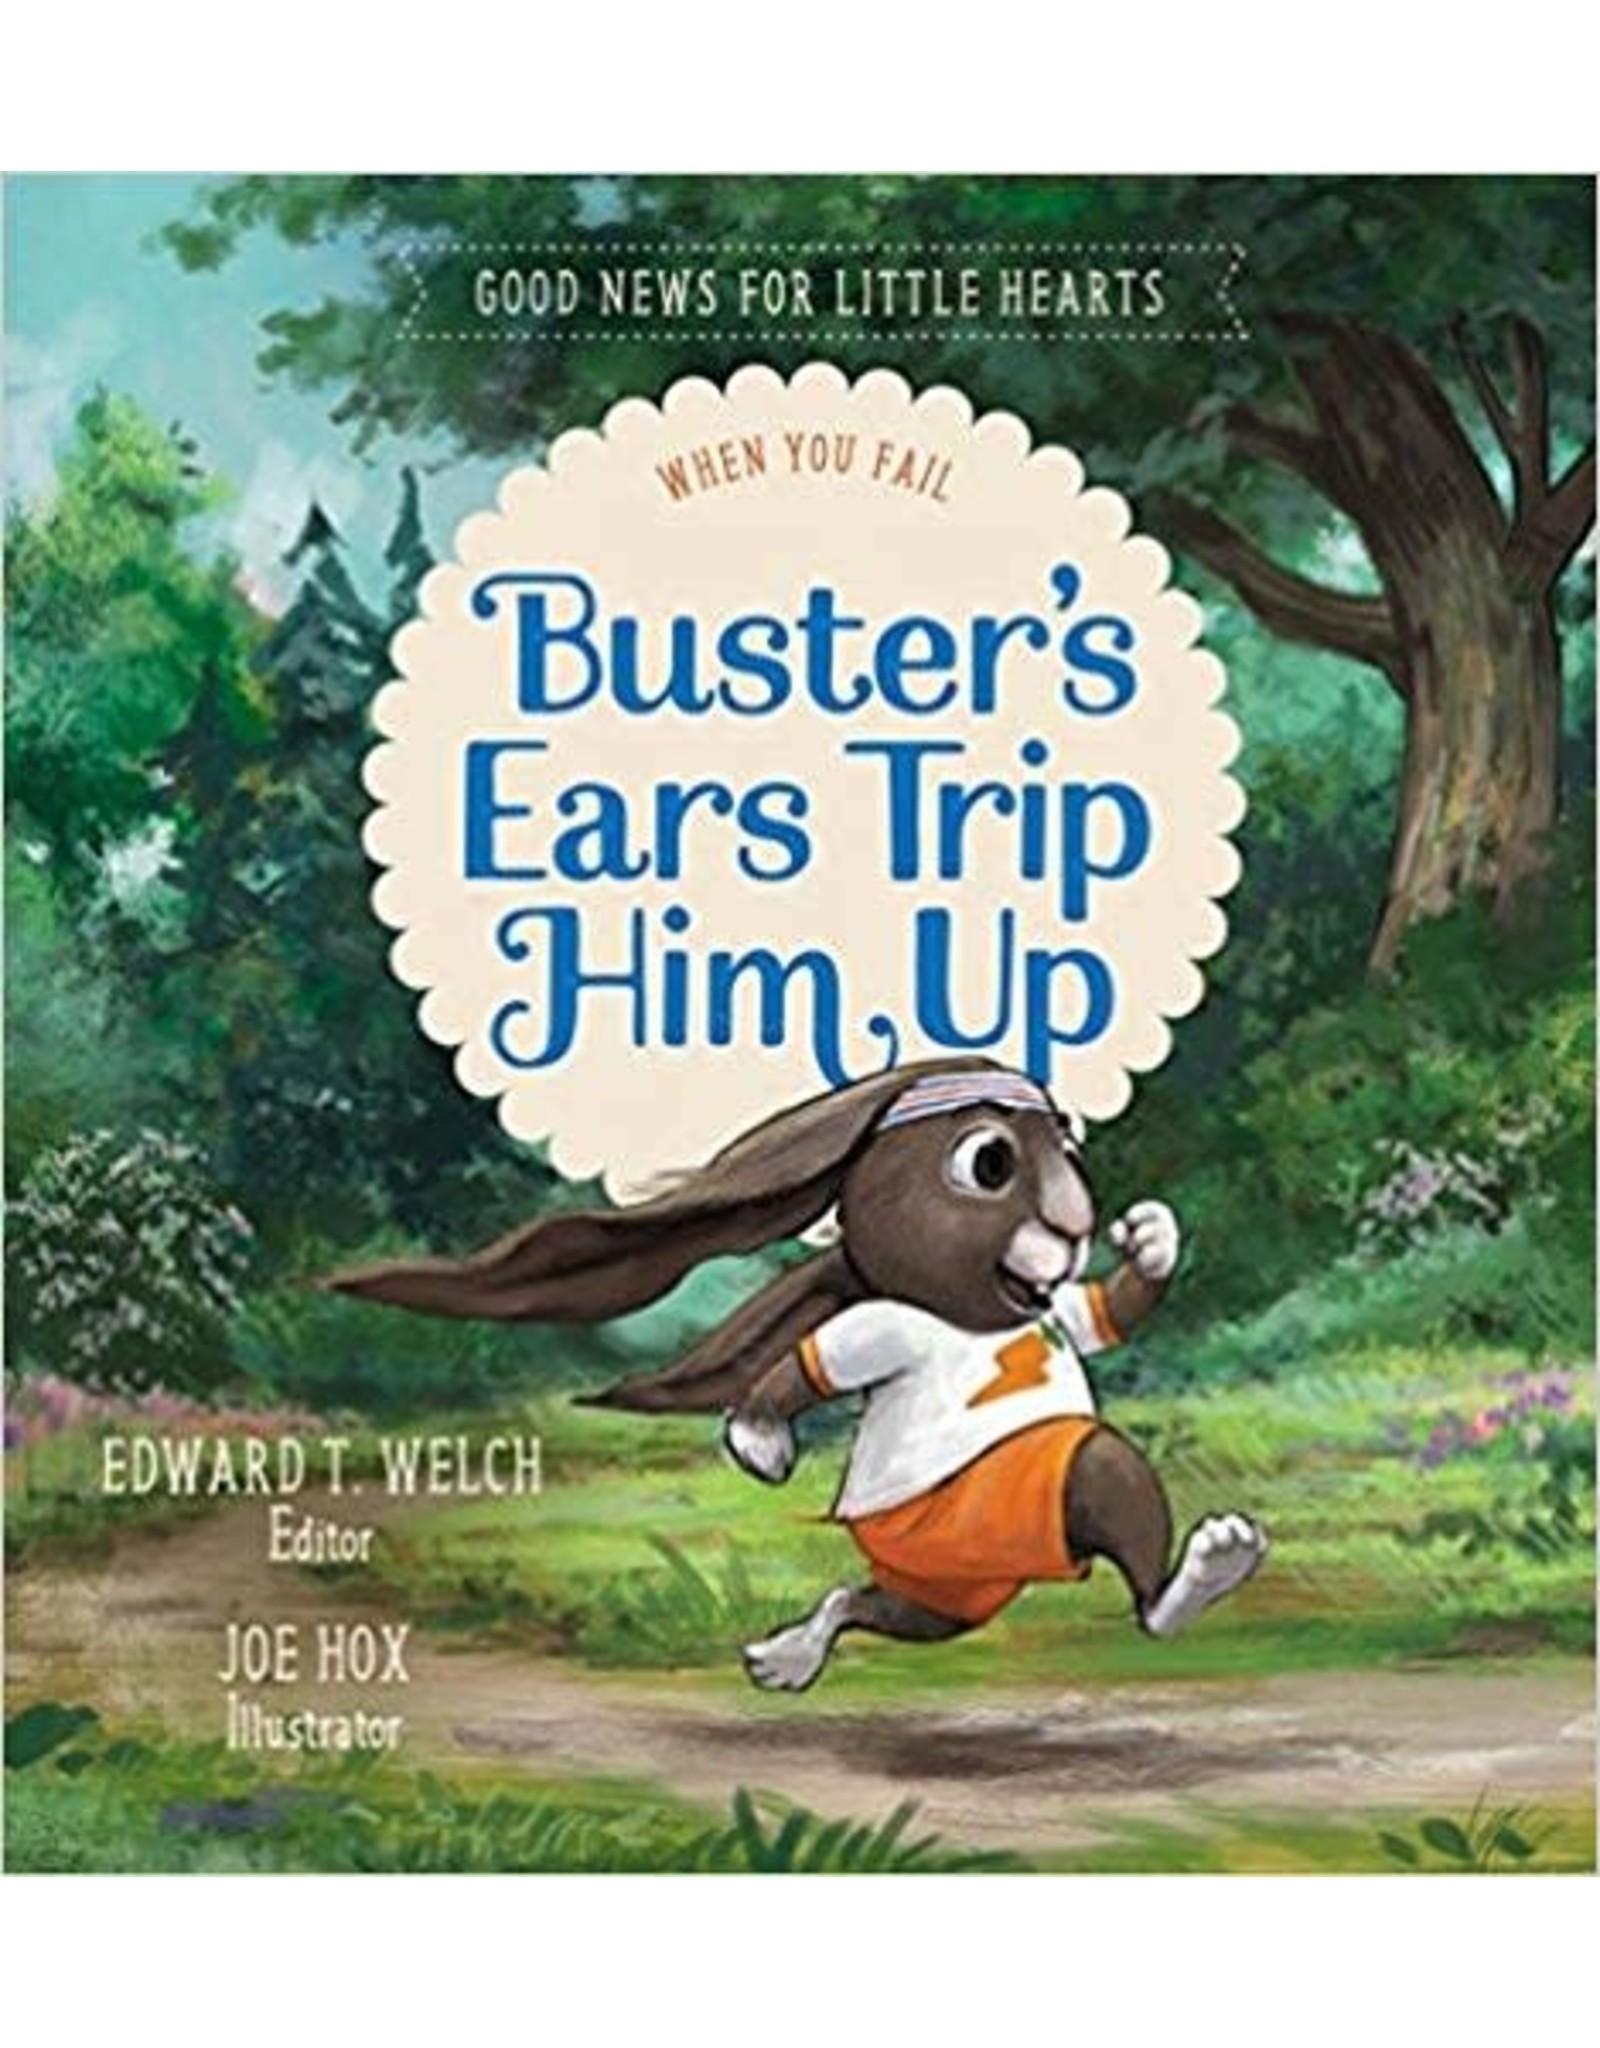 Paul David Tripp Busters Ears Trip Him UpWhen you Fail(Good News for Little Hearts)